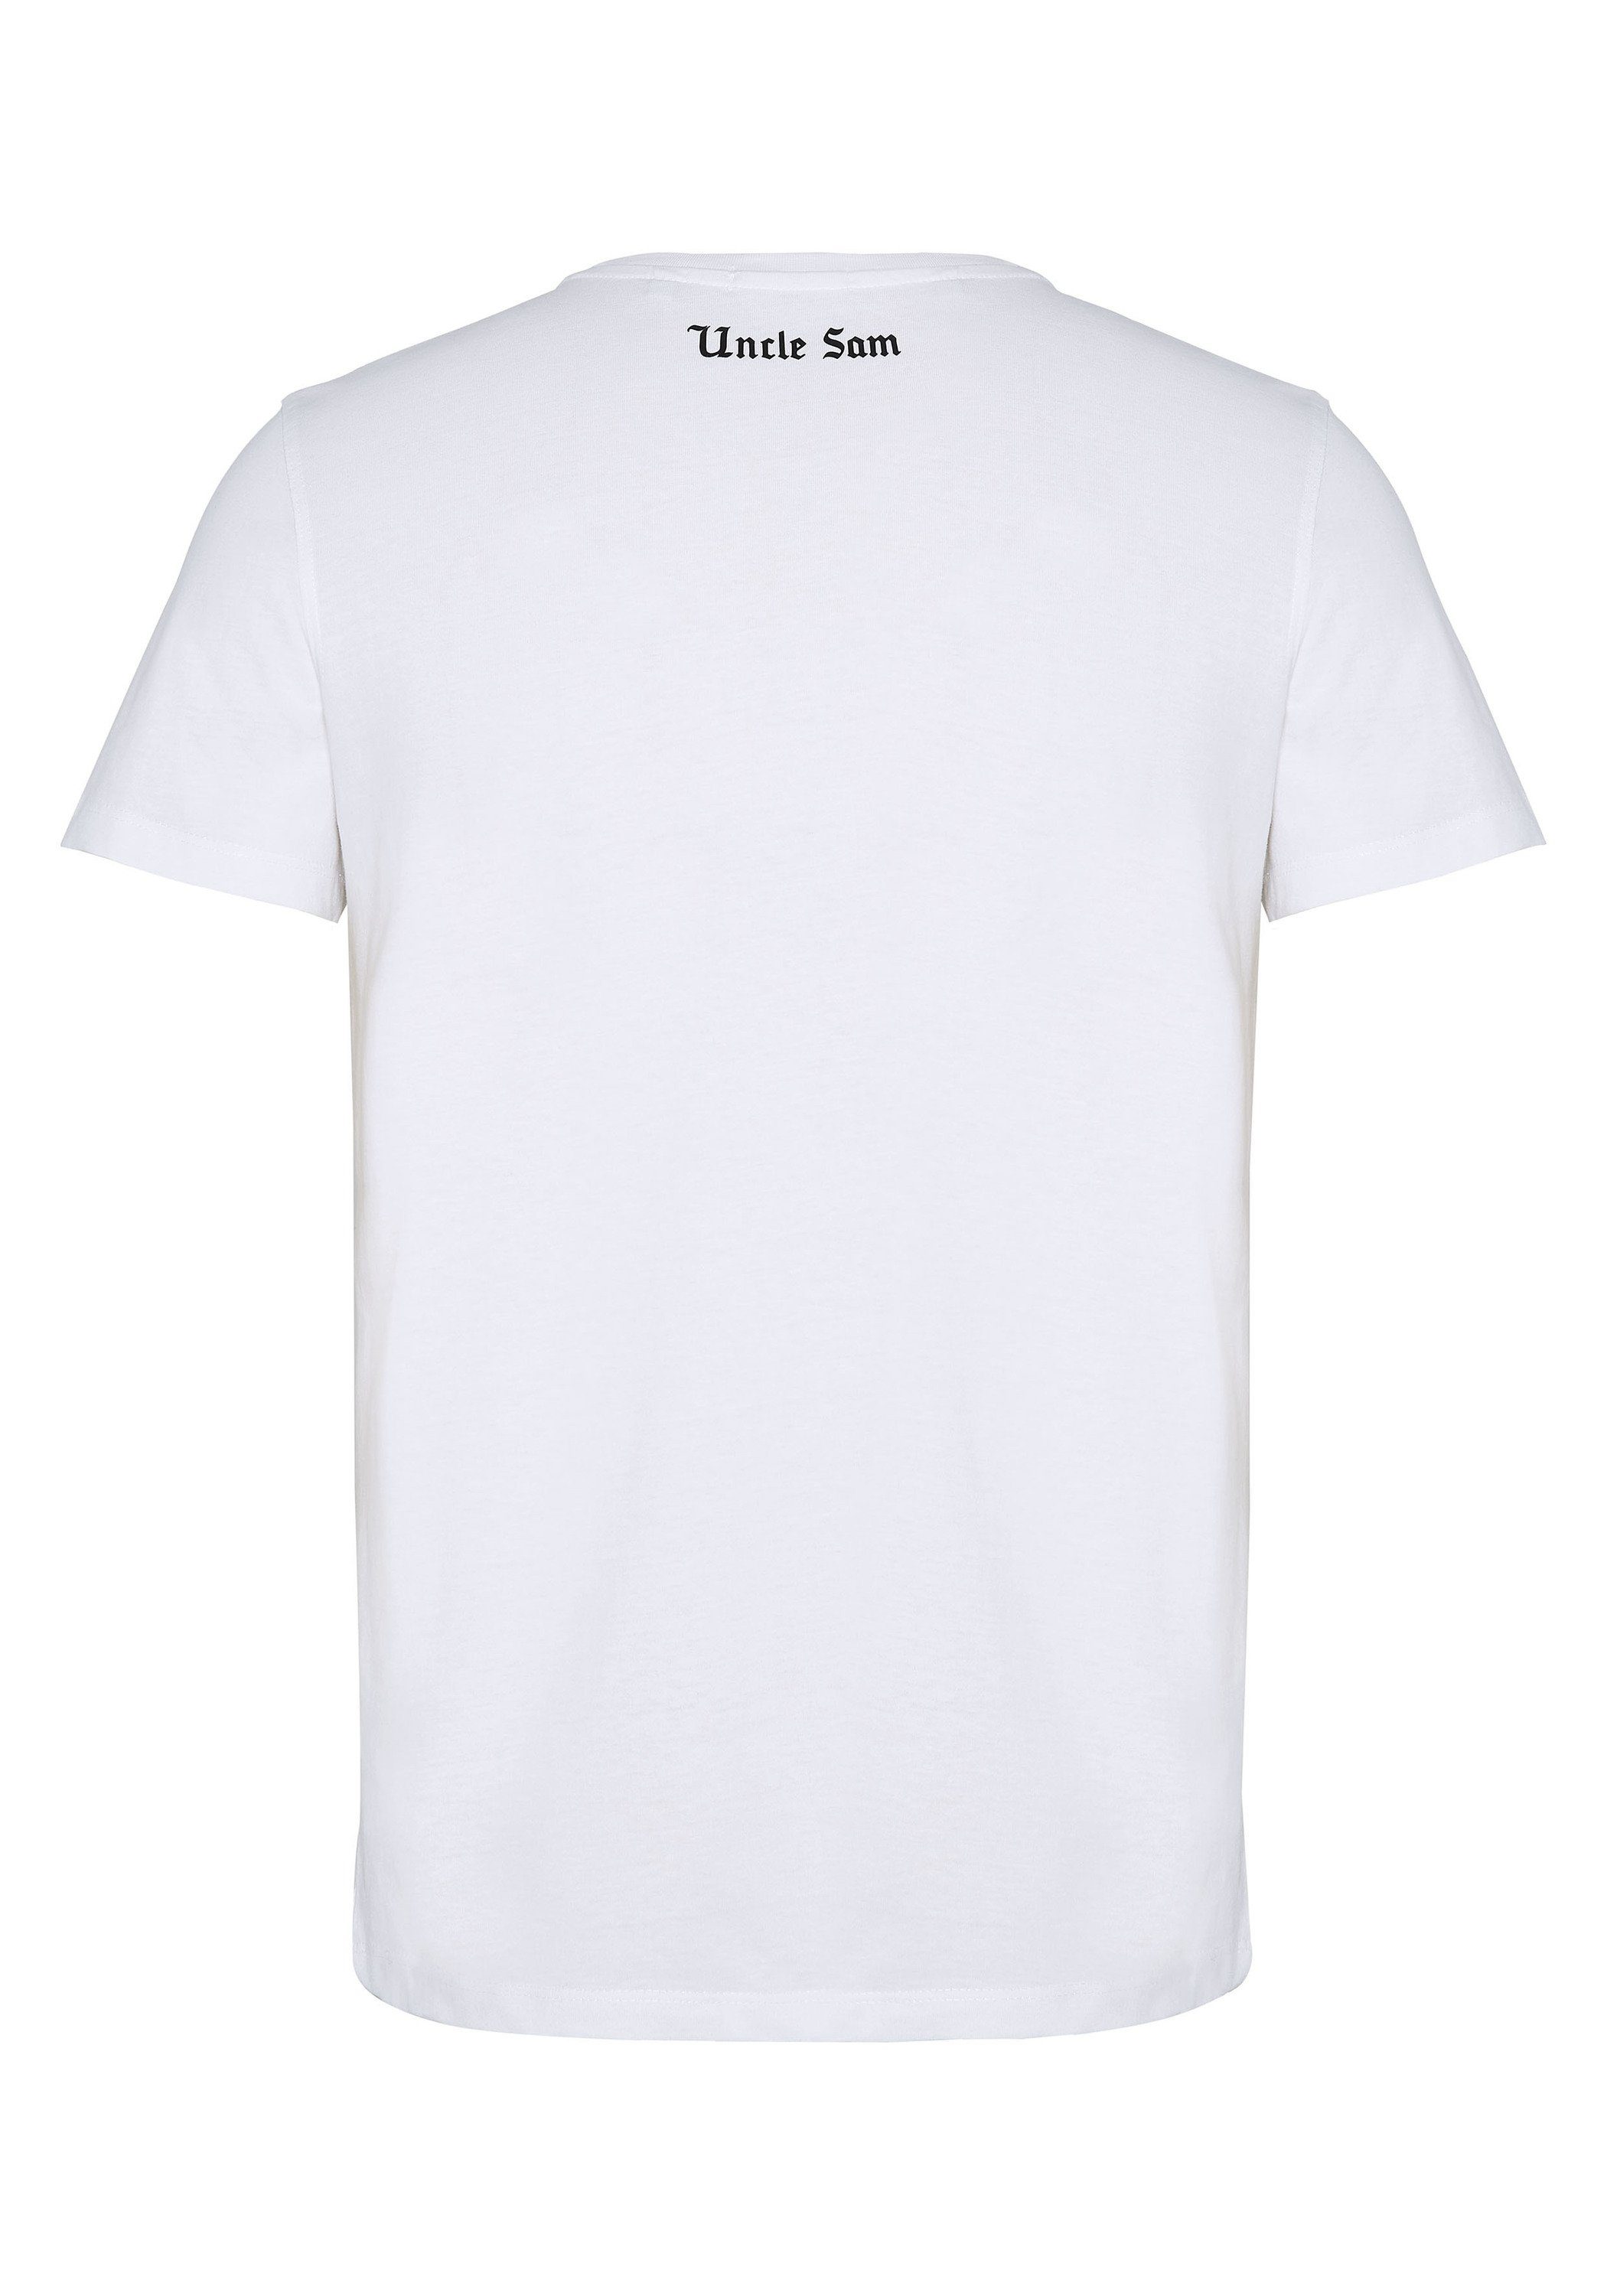 Uncle Frontprint Sam White Bright mit 11-0601 großem T-Shirt